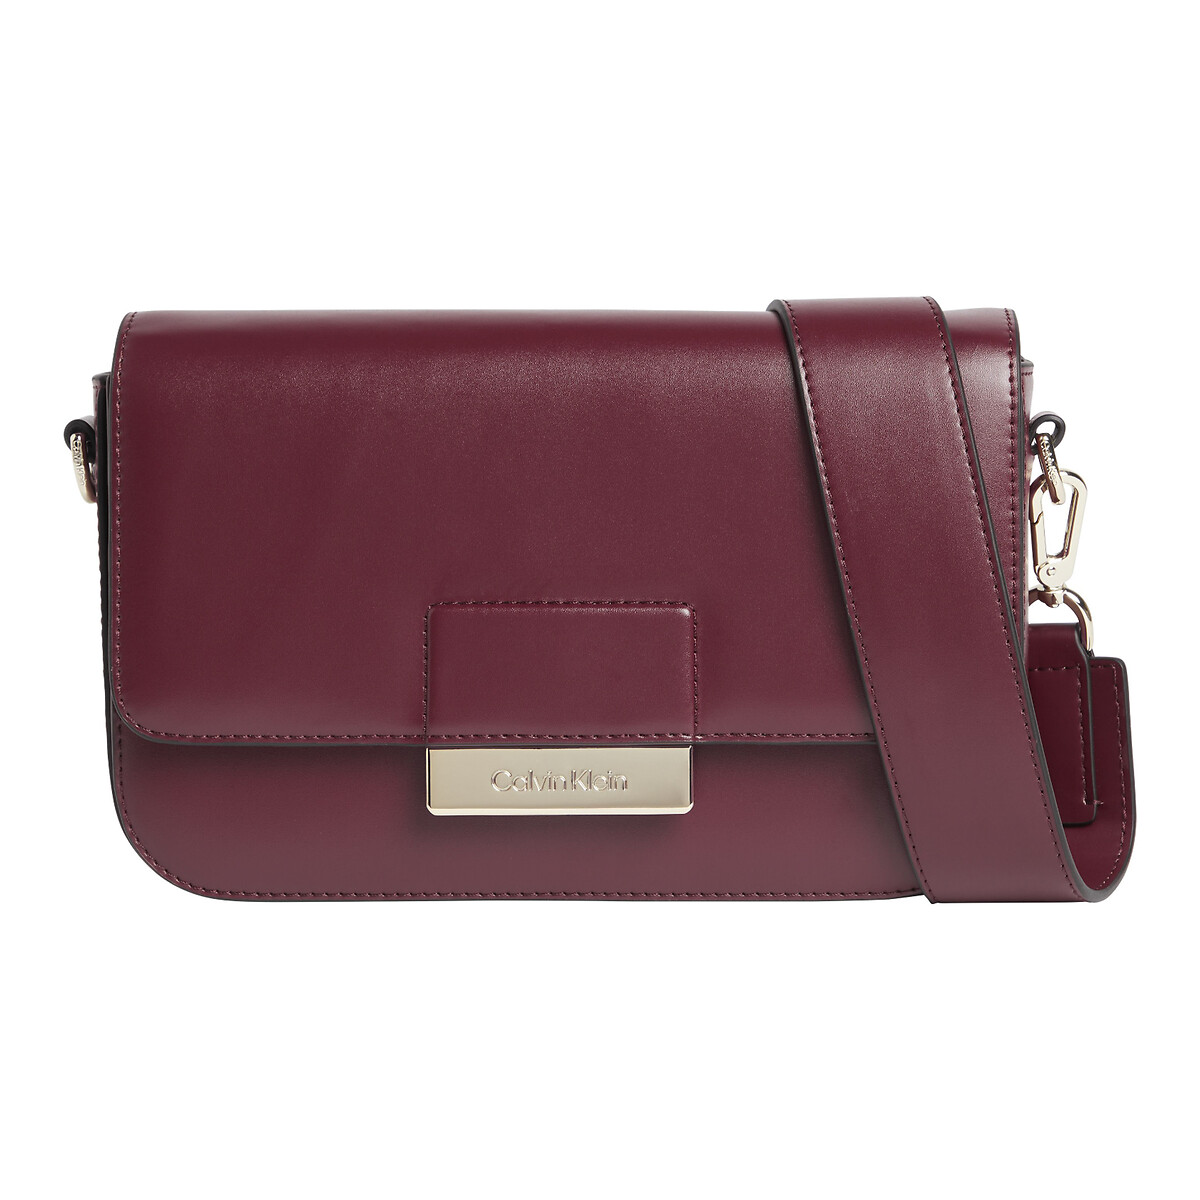 Ck core shoulder bag with wide strap , burgundy, Calvin Klein | La Redoute